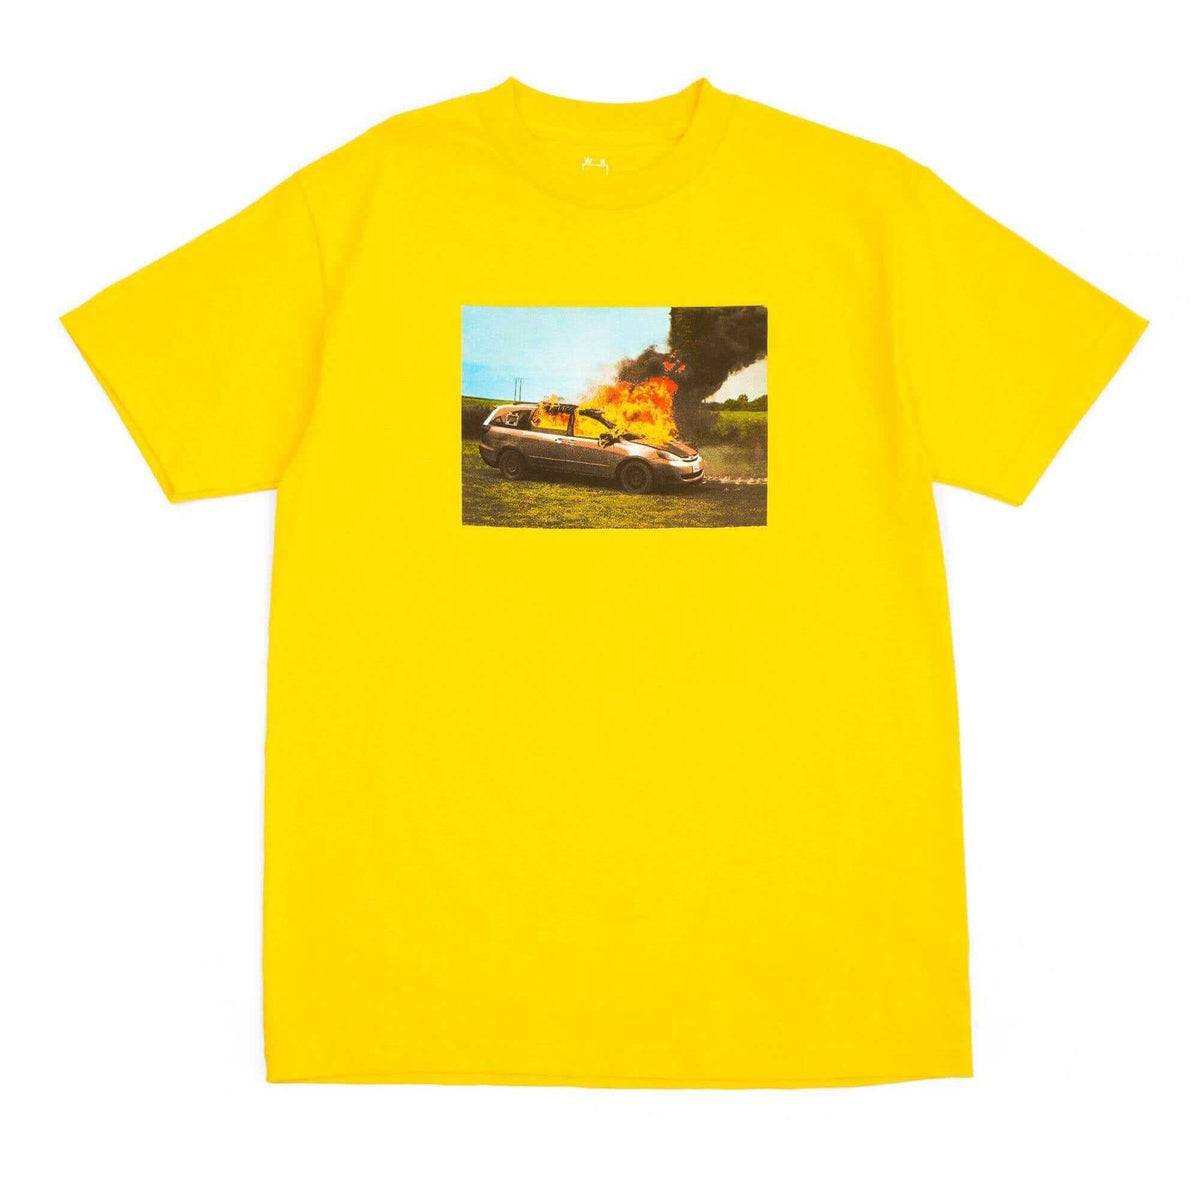 WKND Van on Fire T-Shirt Yellow